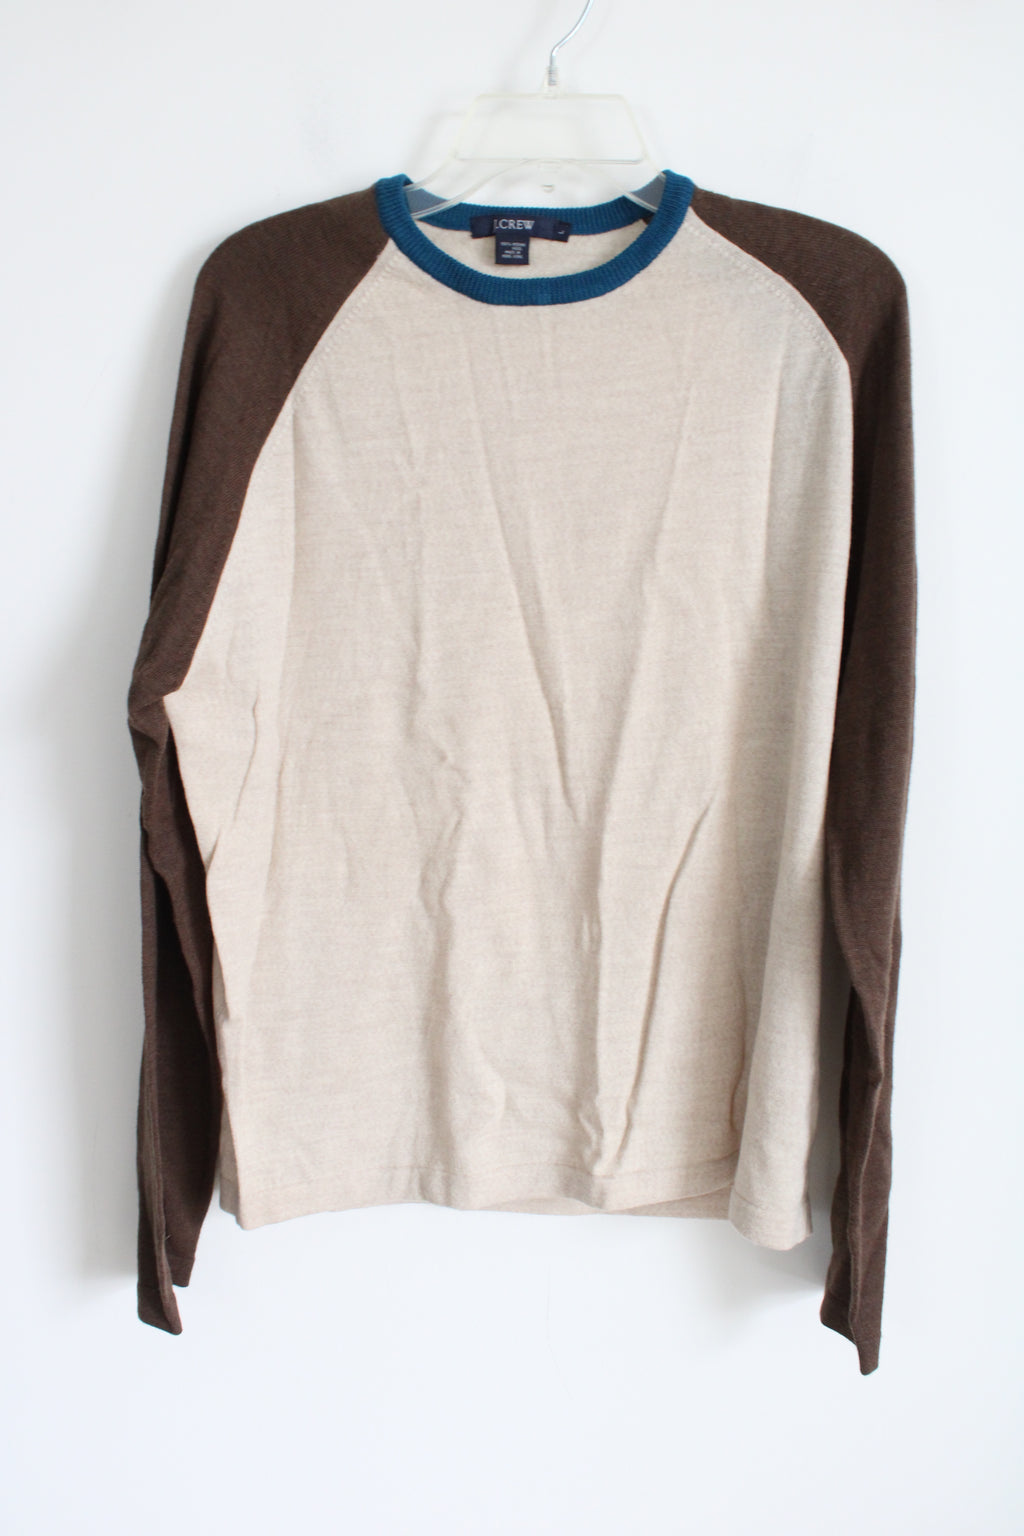 J.Crew Merino Wool Brown Sweater | L